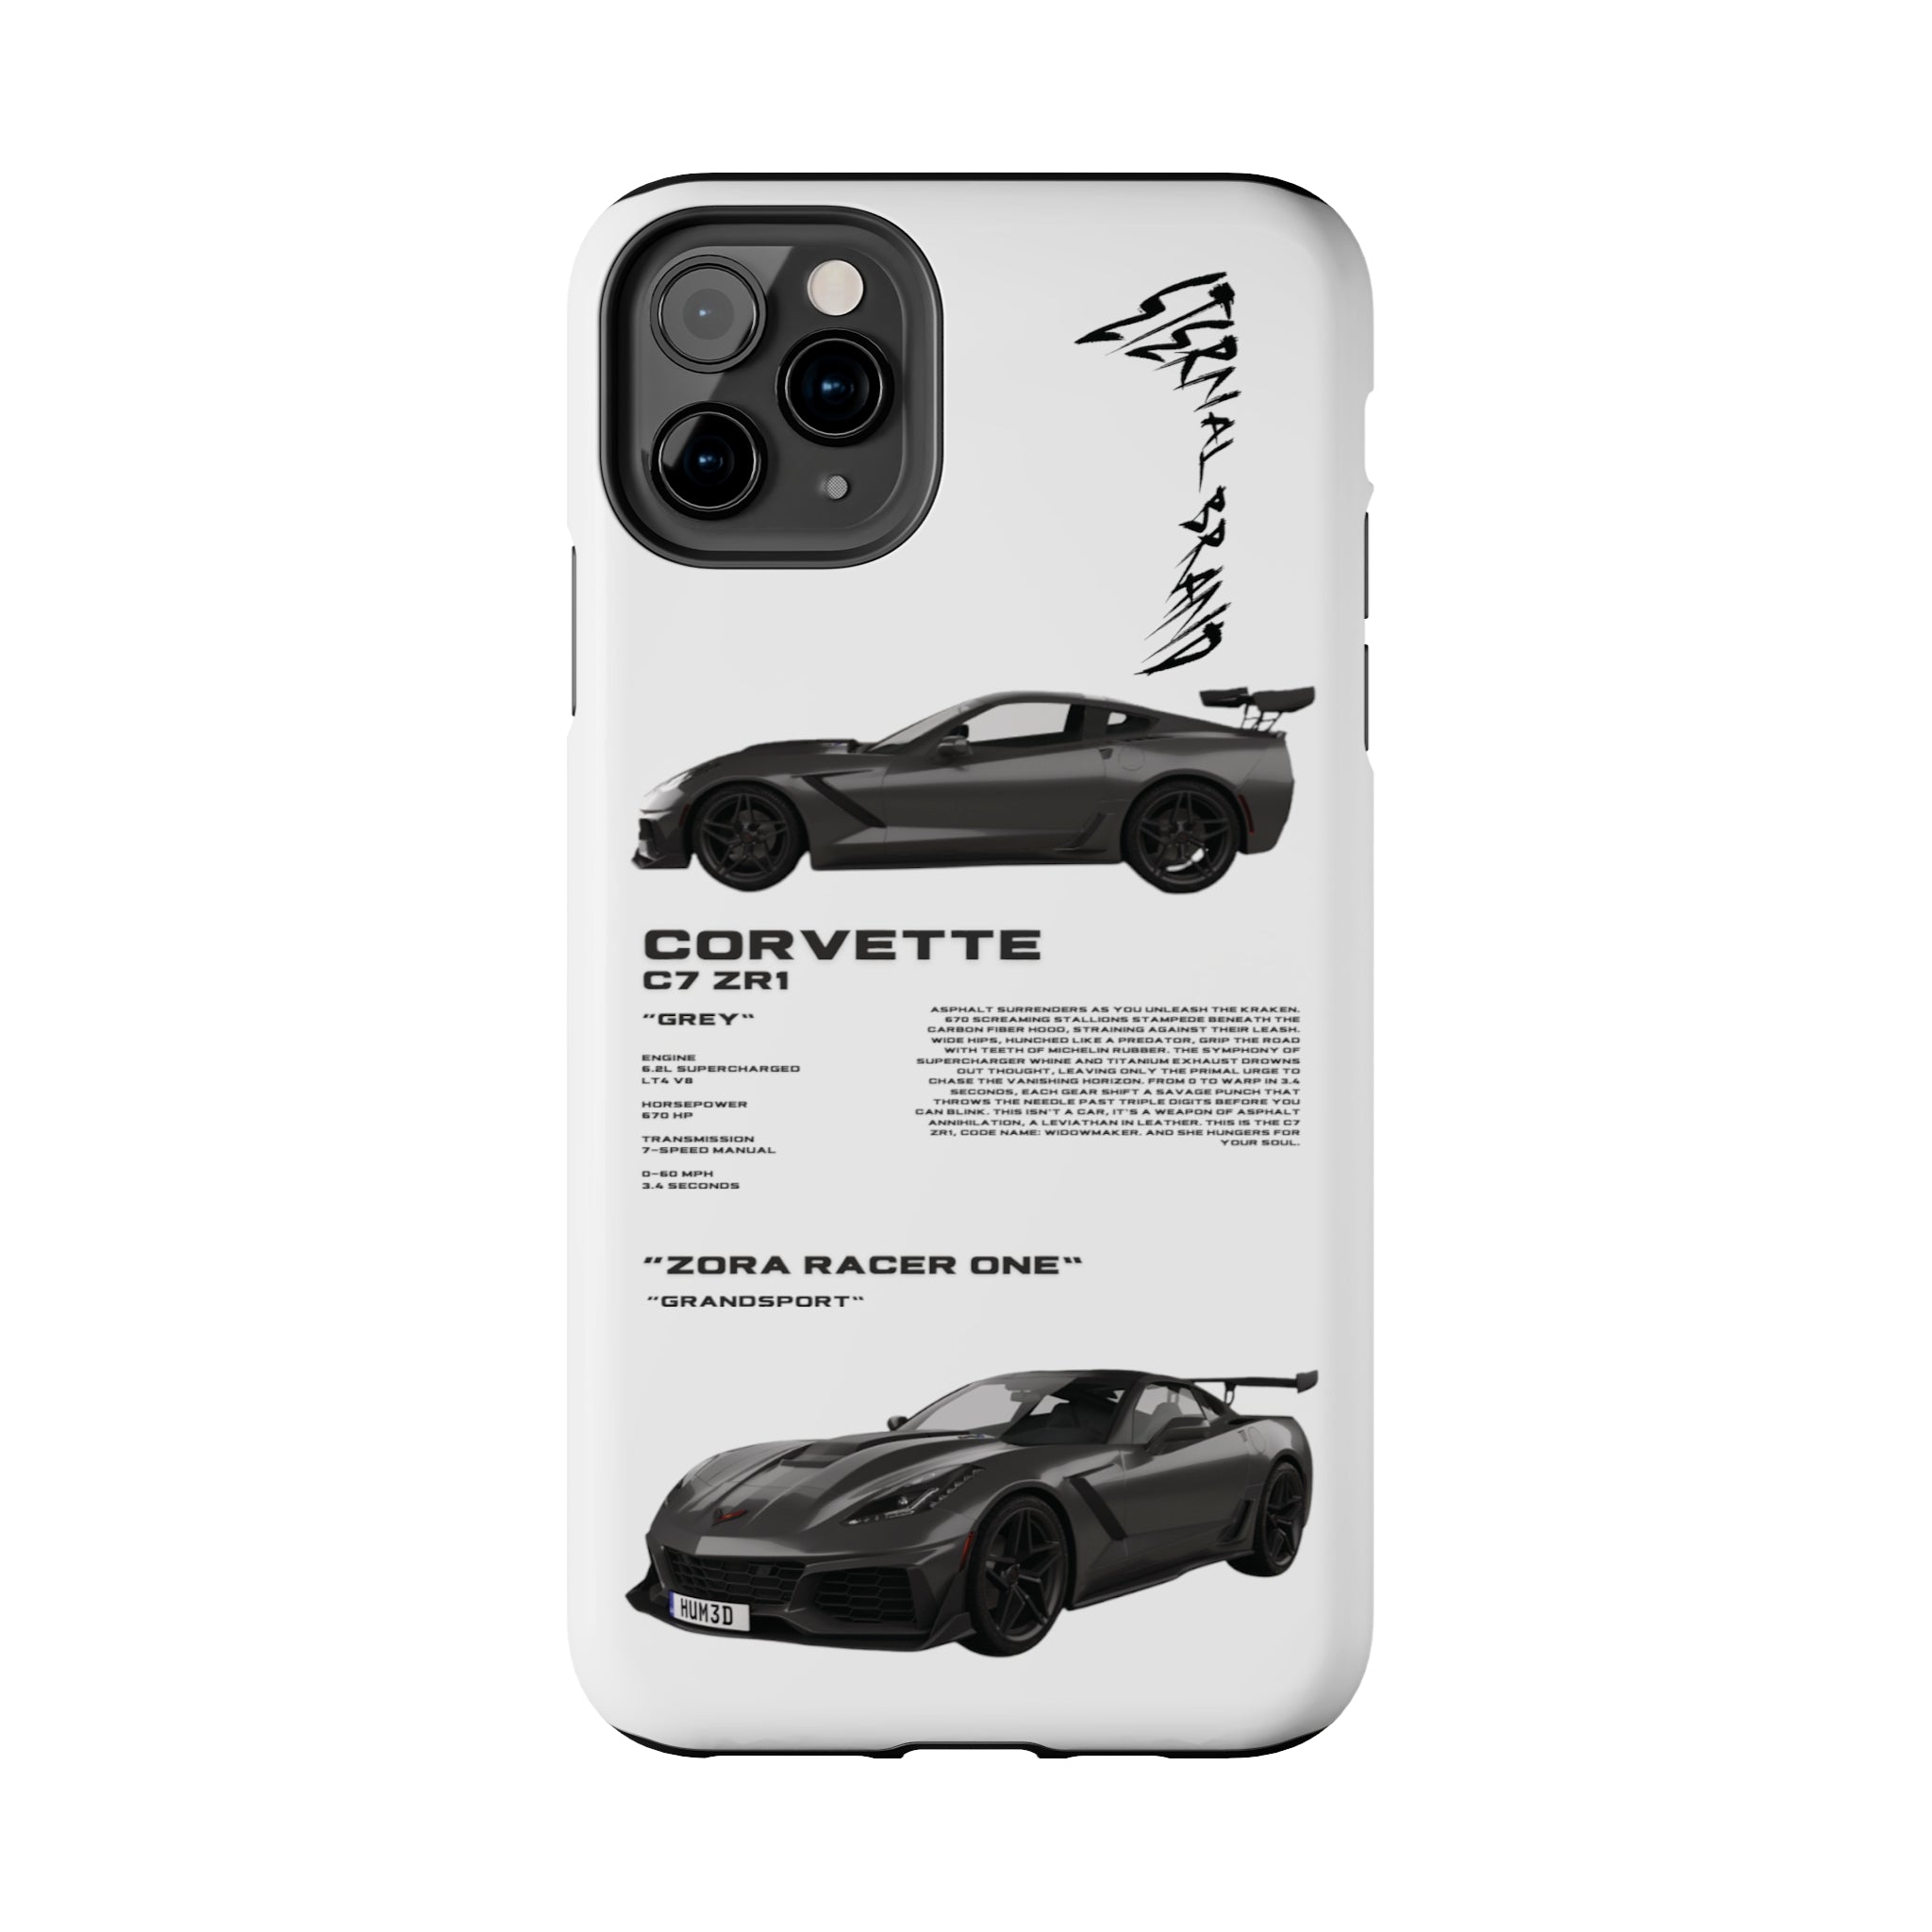 Corvette C7 ZR1